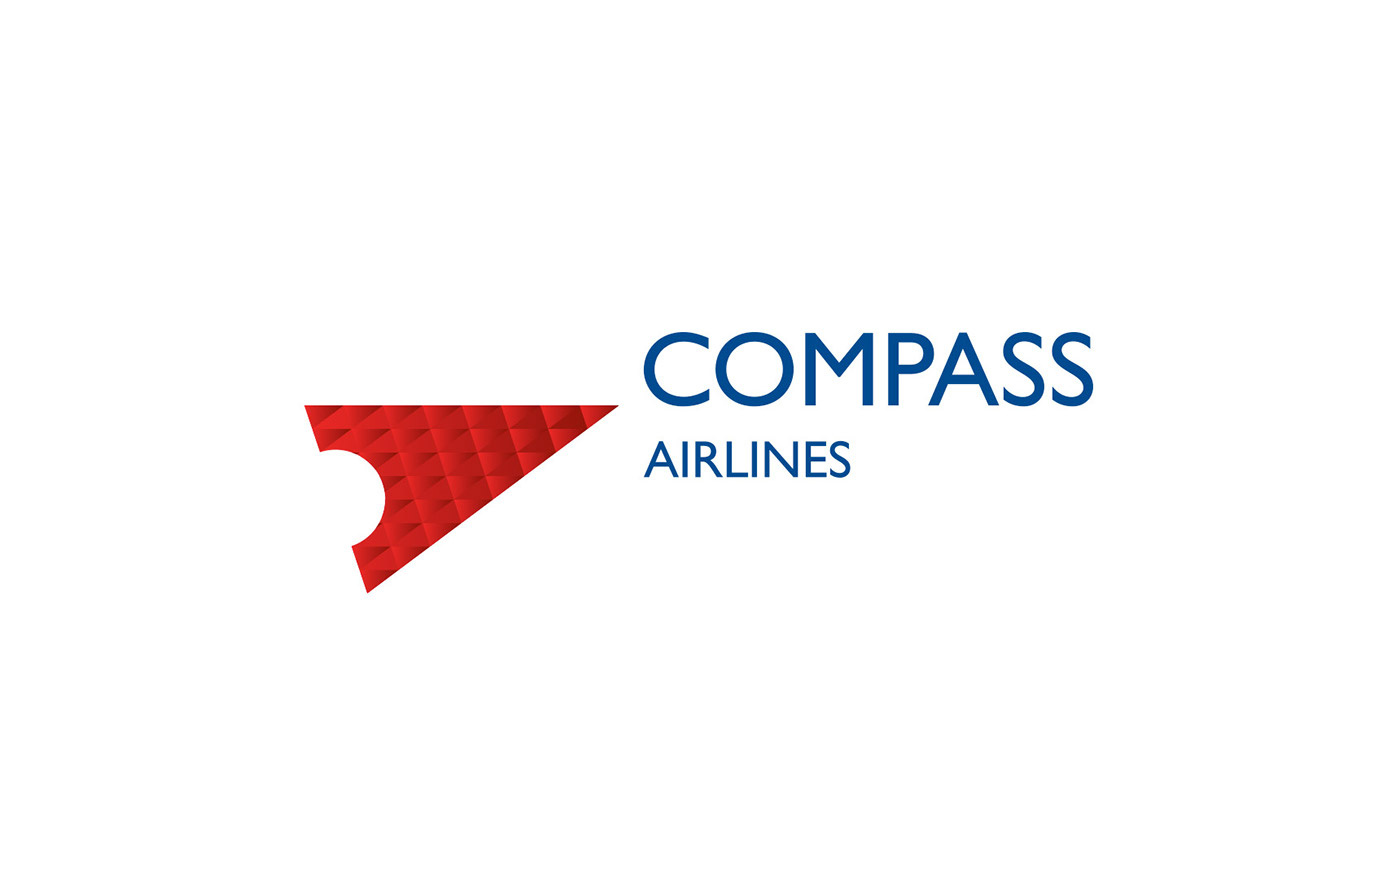 Airlines Airline Branding rebranding Airline Identity Airways Aircraft airline airplane compass bird arctic tern reindeer tape